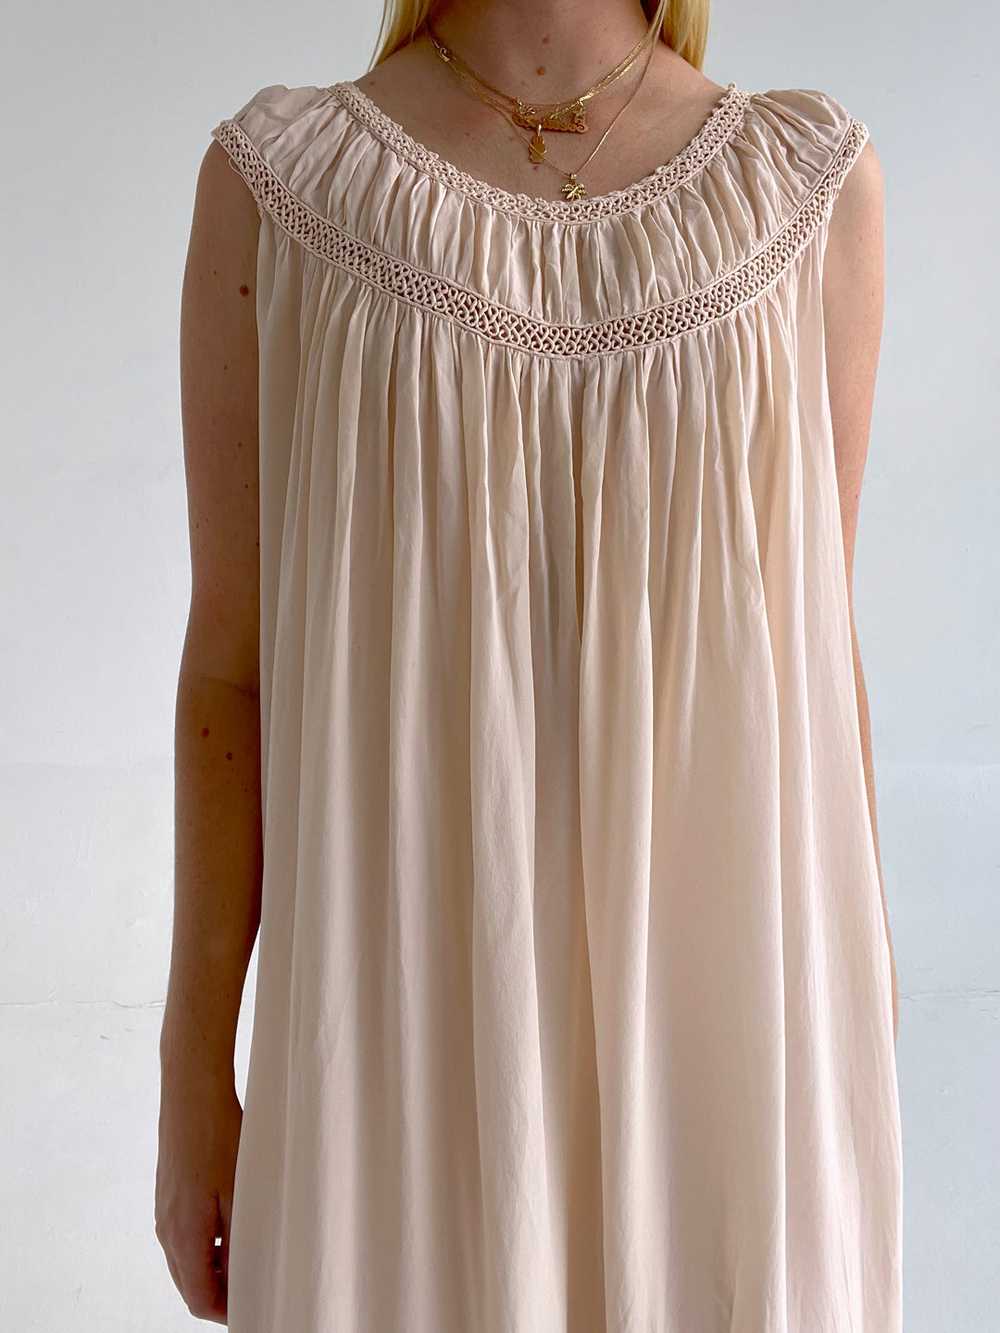 1930's Pale Peach Silk Dress - image 1